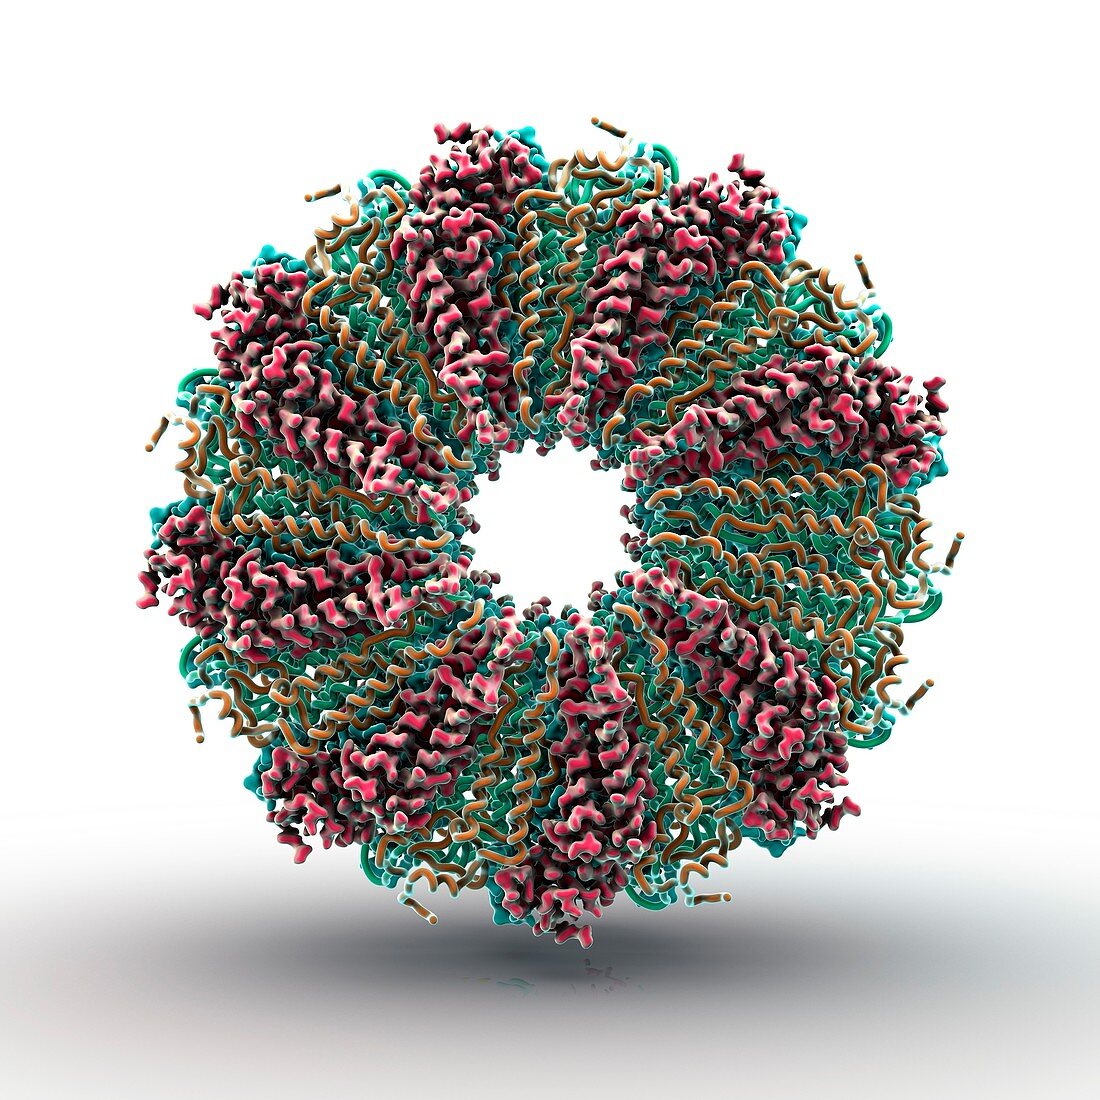 Tobacco mosaic virus proteins,artwork